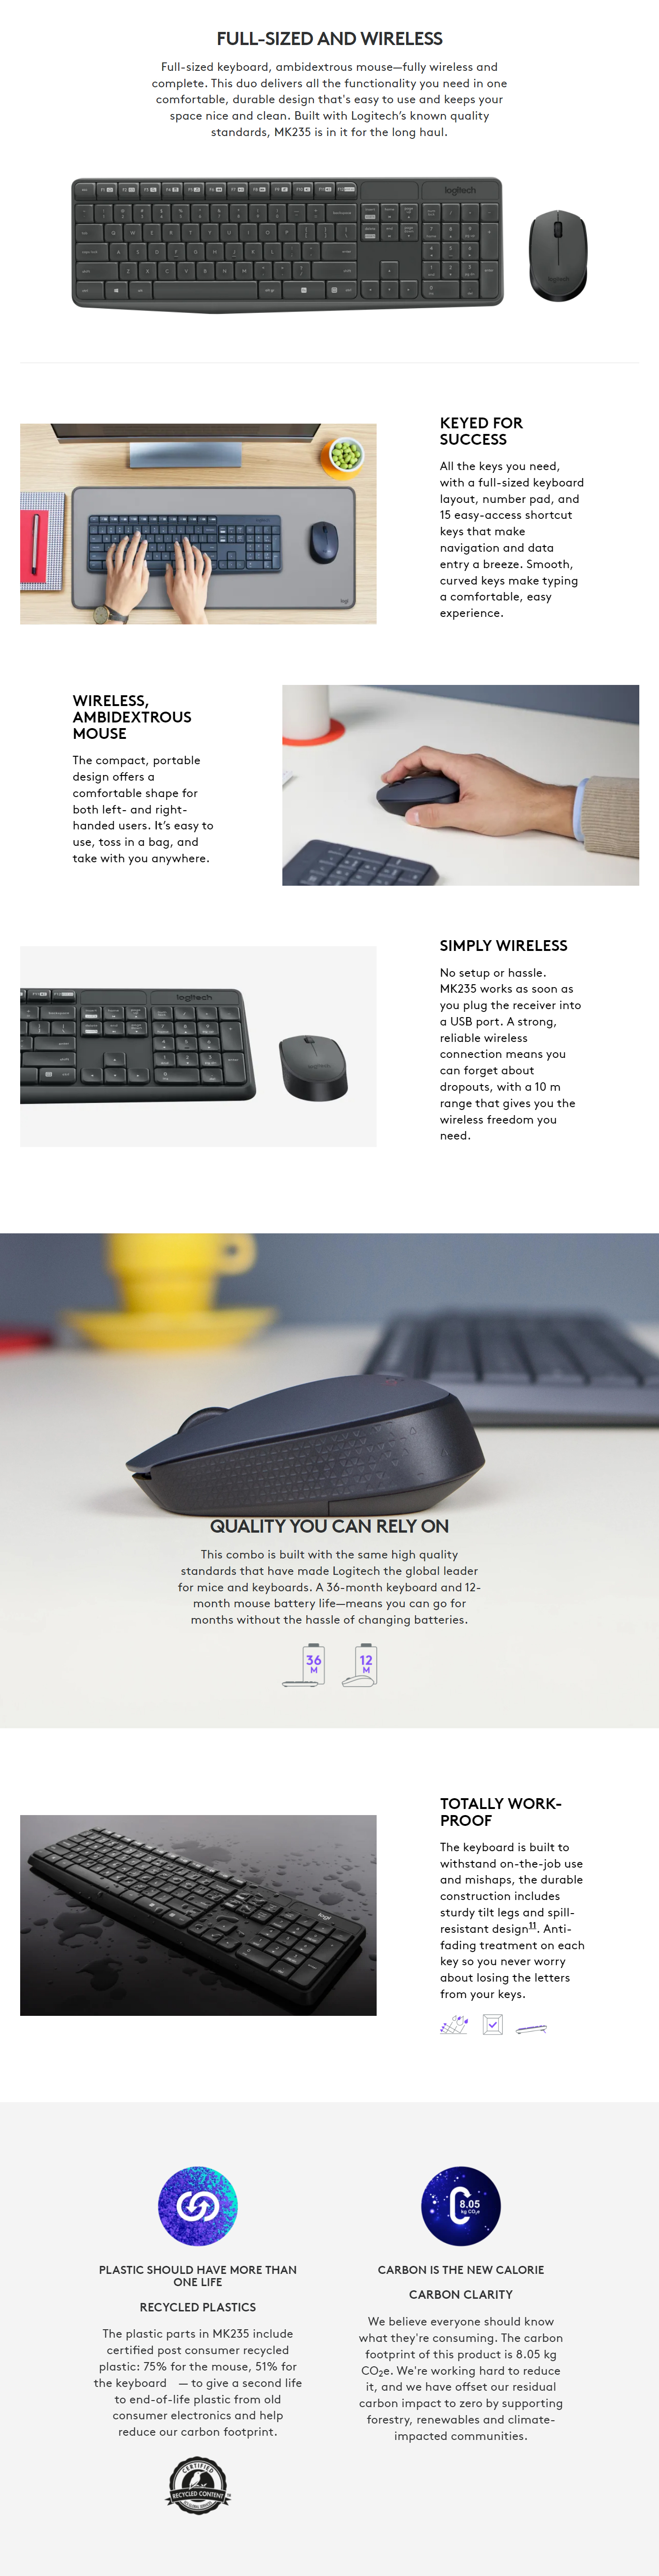 Keyboard-Mouse-Combos-Logitech-MK235-Wireless-Combo-Keyboard-Mouse-920-007937-1